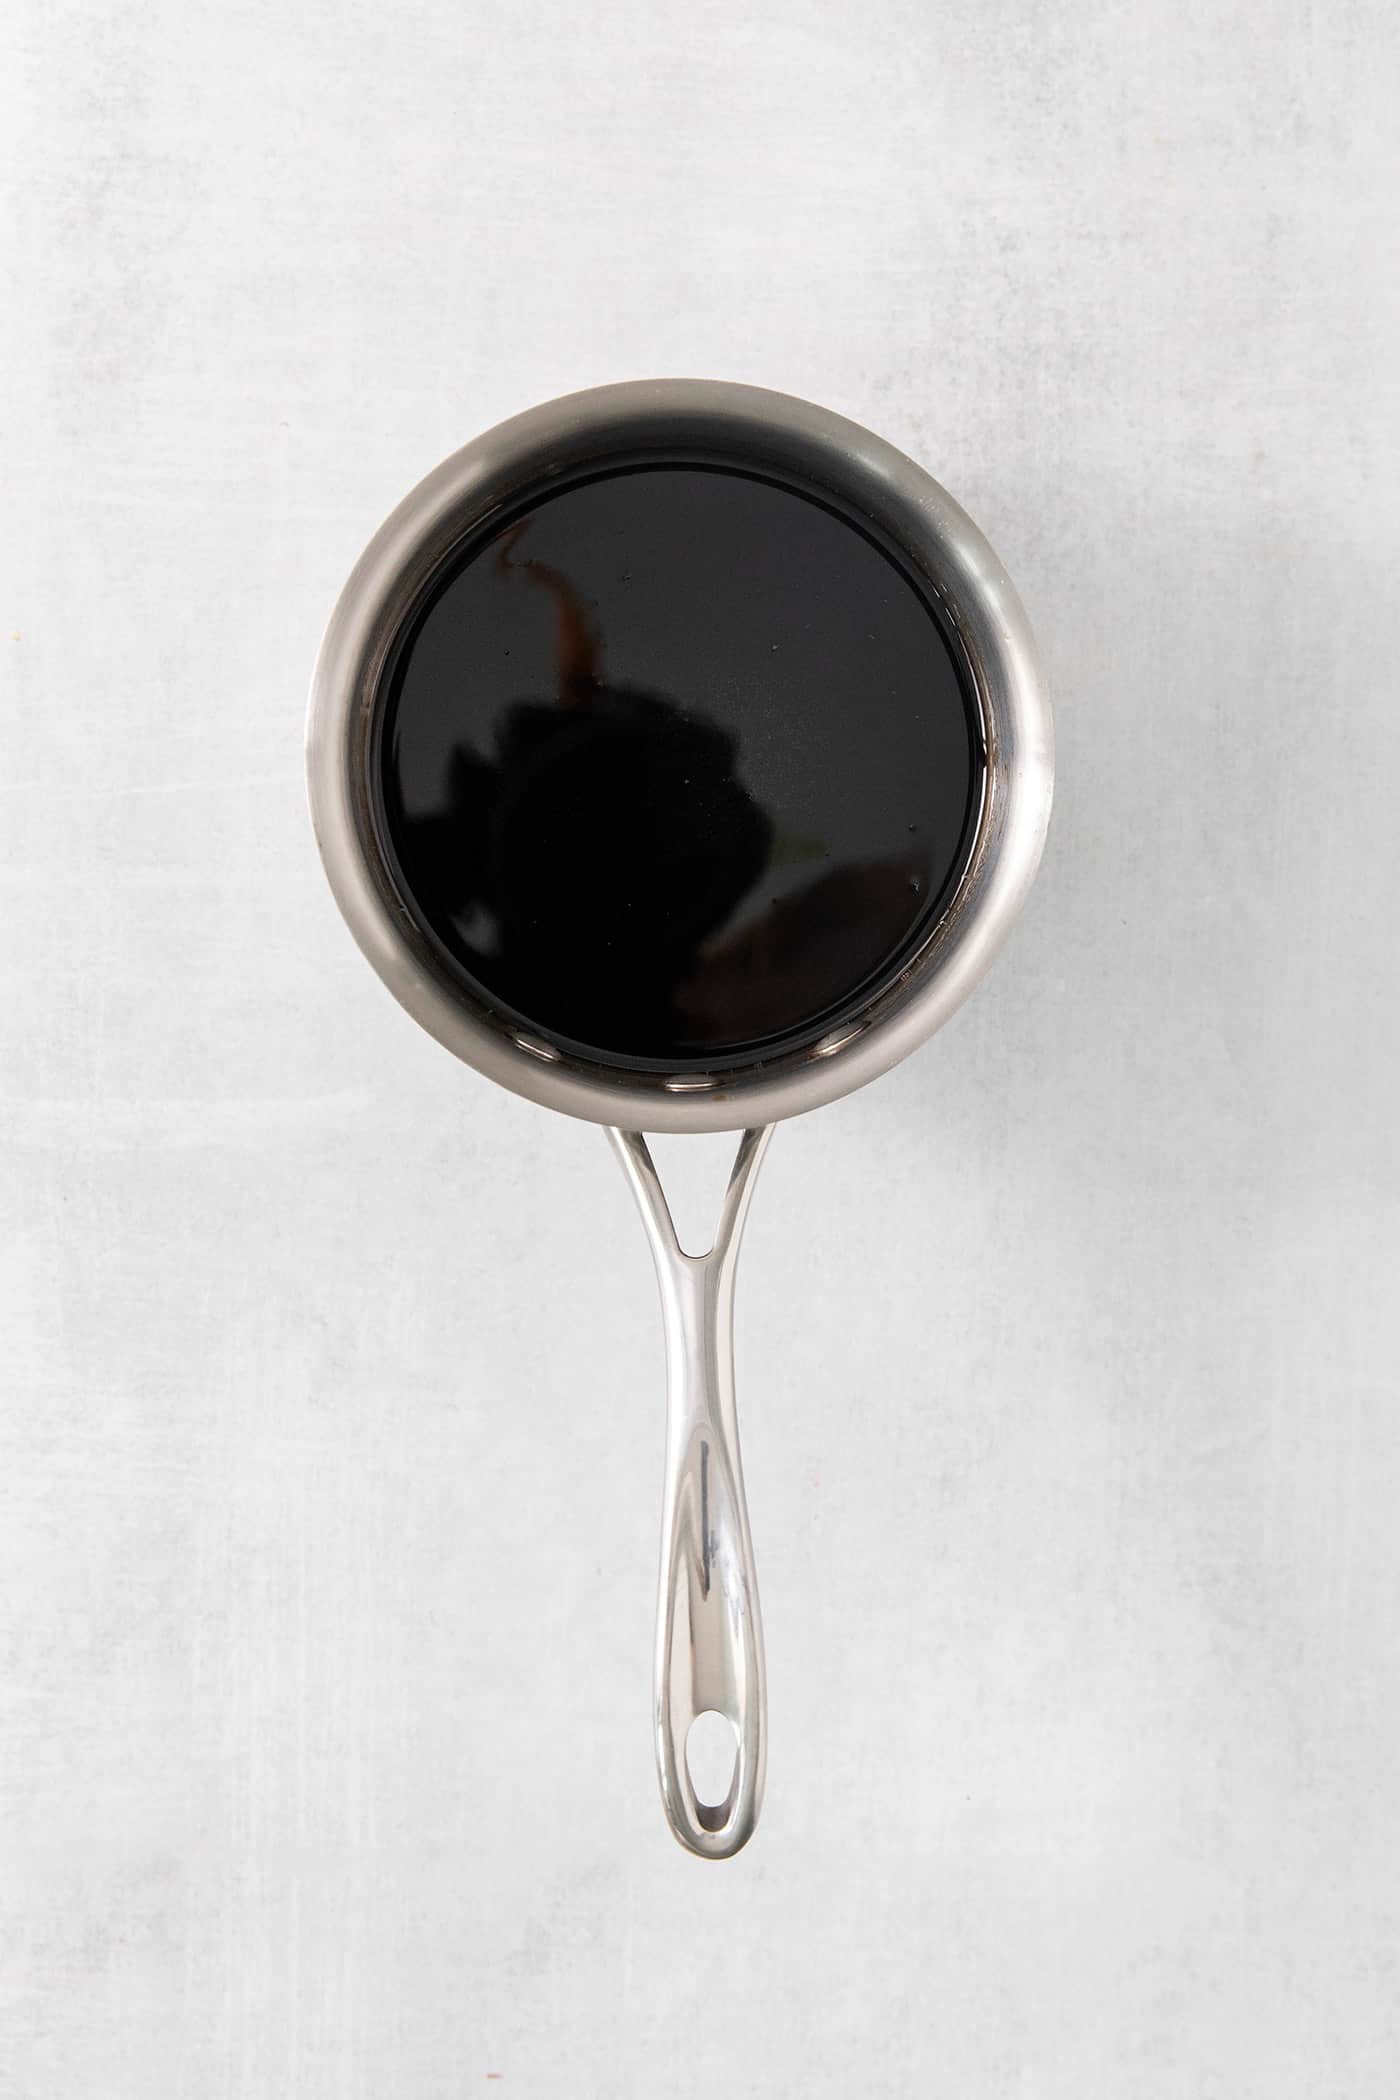 Brown sugar syrup in a saucepan